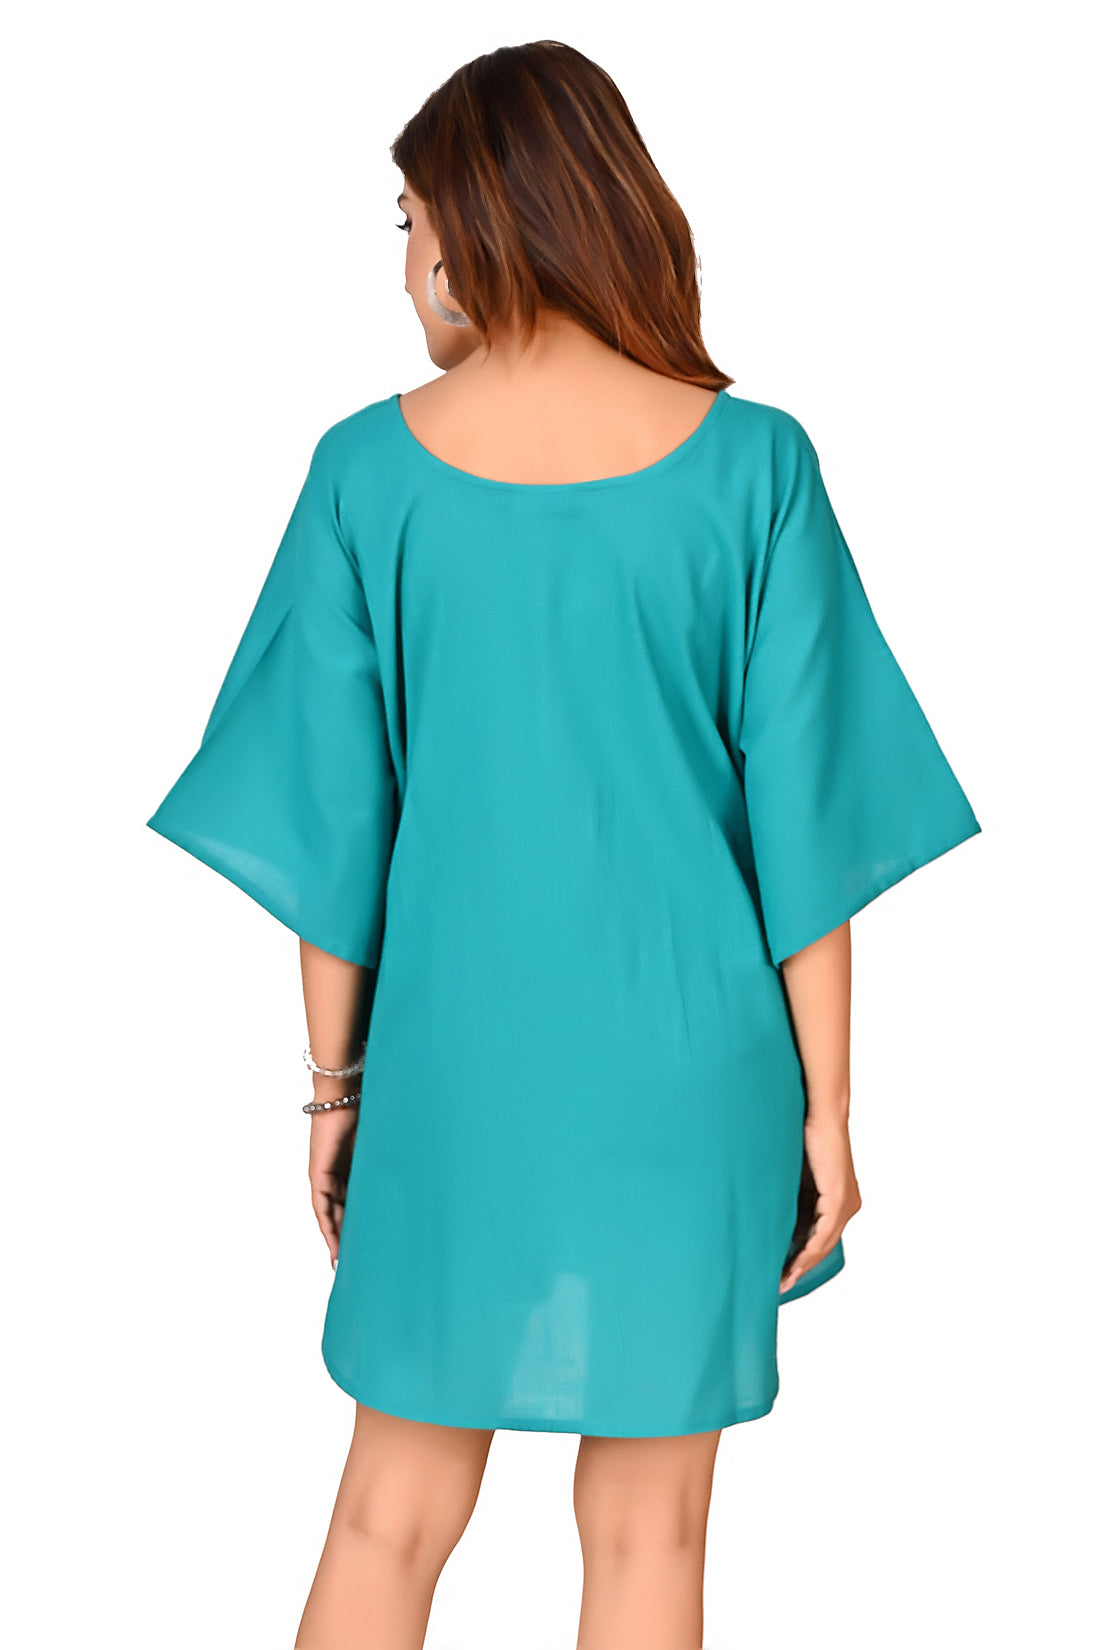 Nirmal online Premium Cotton Top for Women in Teal Blue Colour